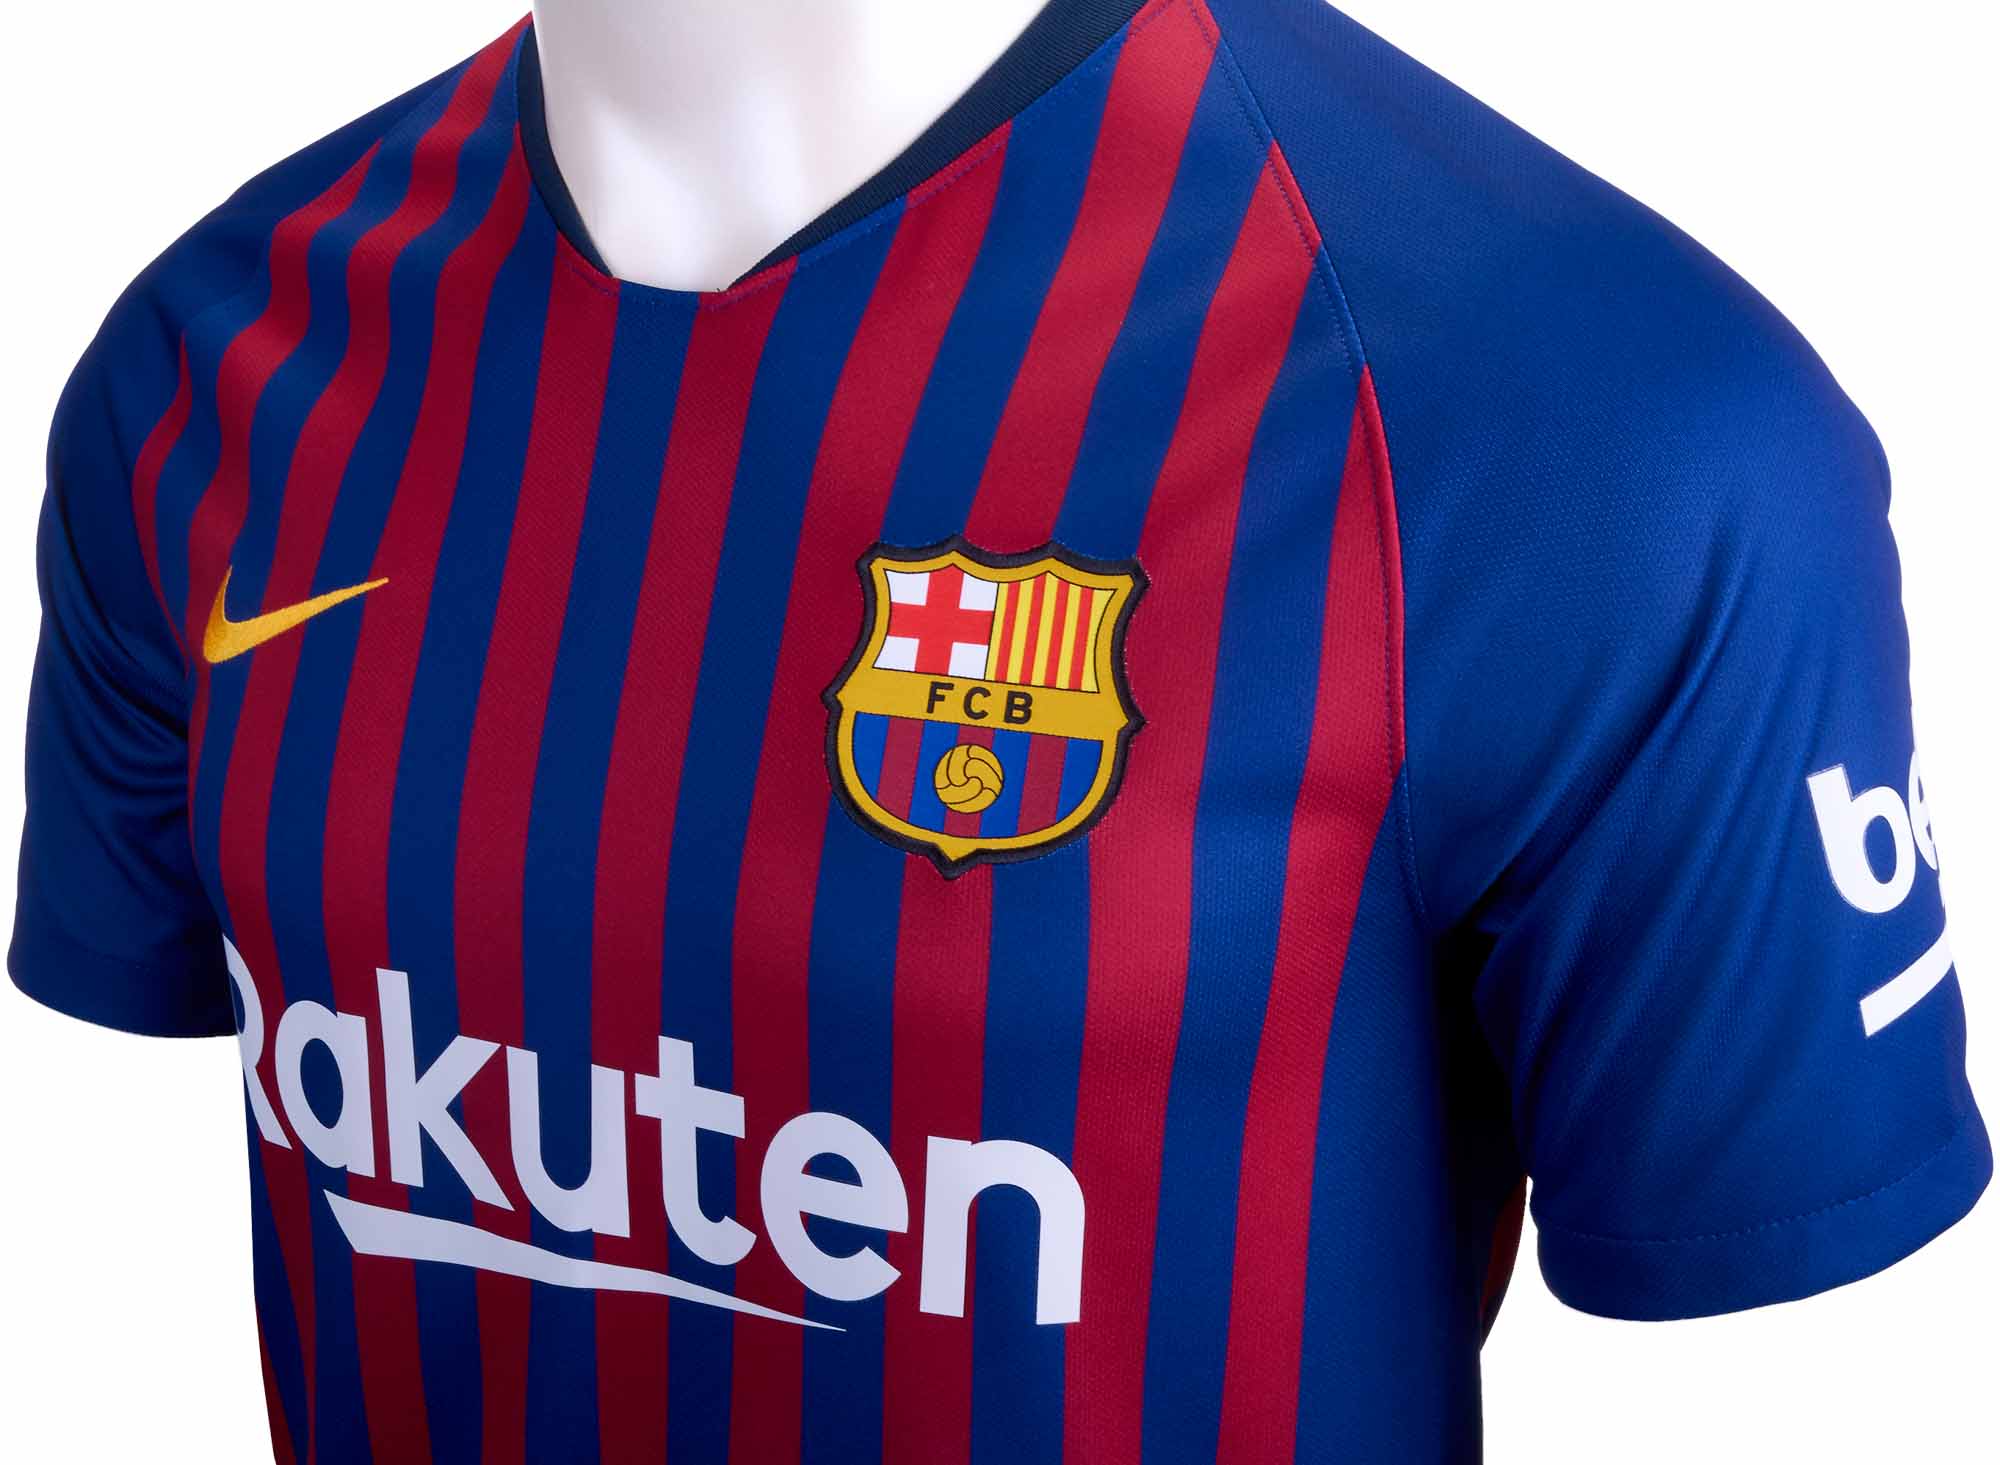 Trikot Coutinho 2019 Barcelona Official Offizielle Barcelona 2018 Fcb 7